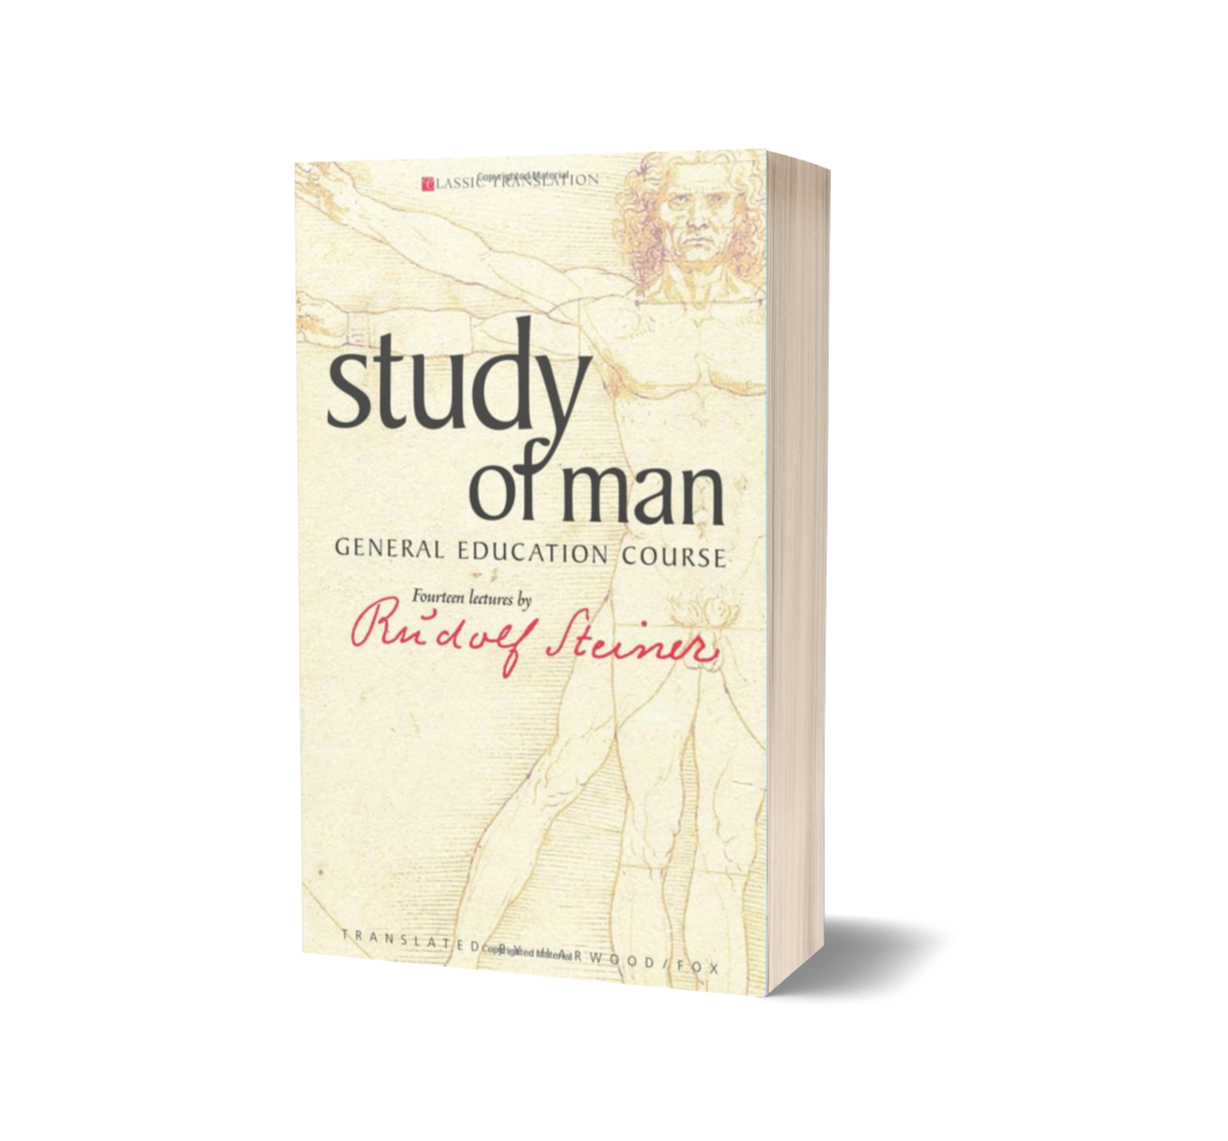 Study of Man (Classic Translation Reprint)